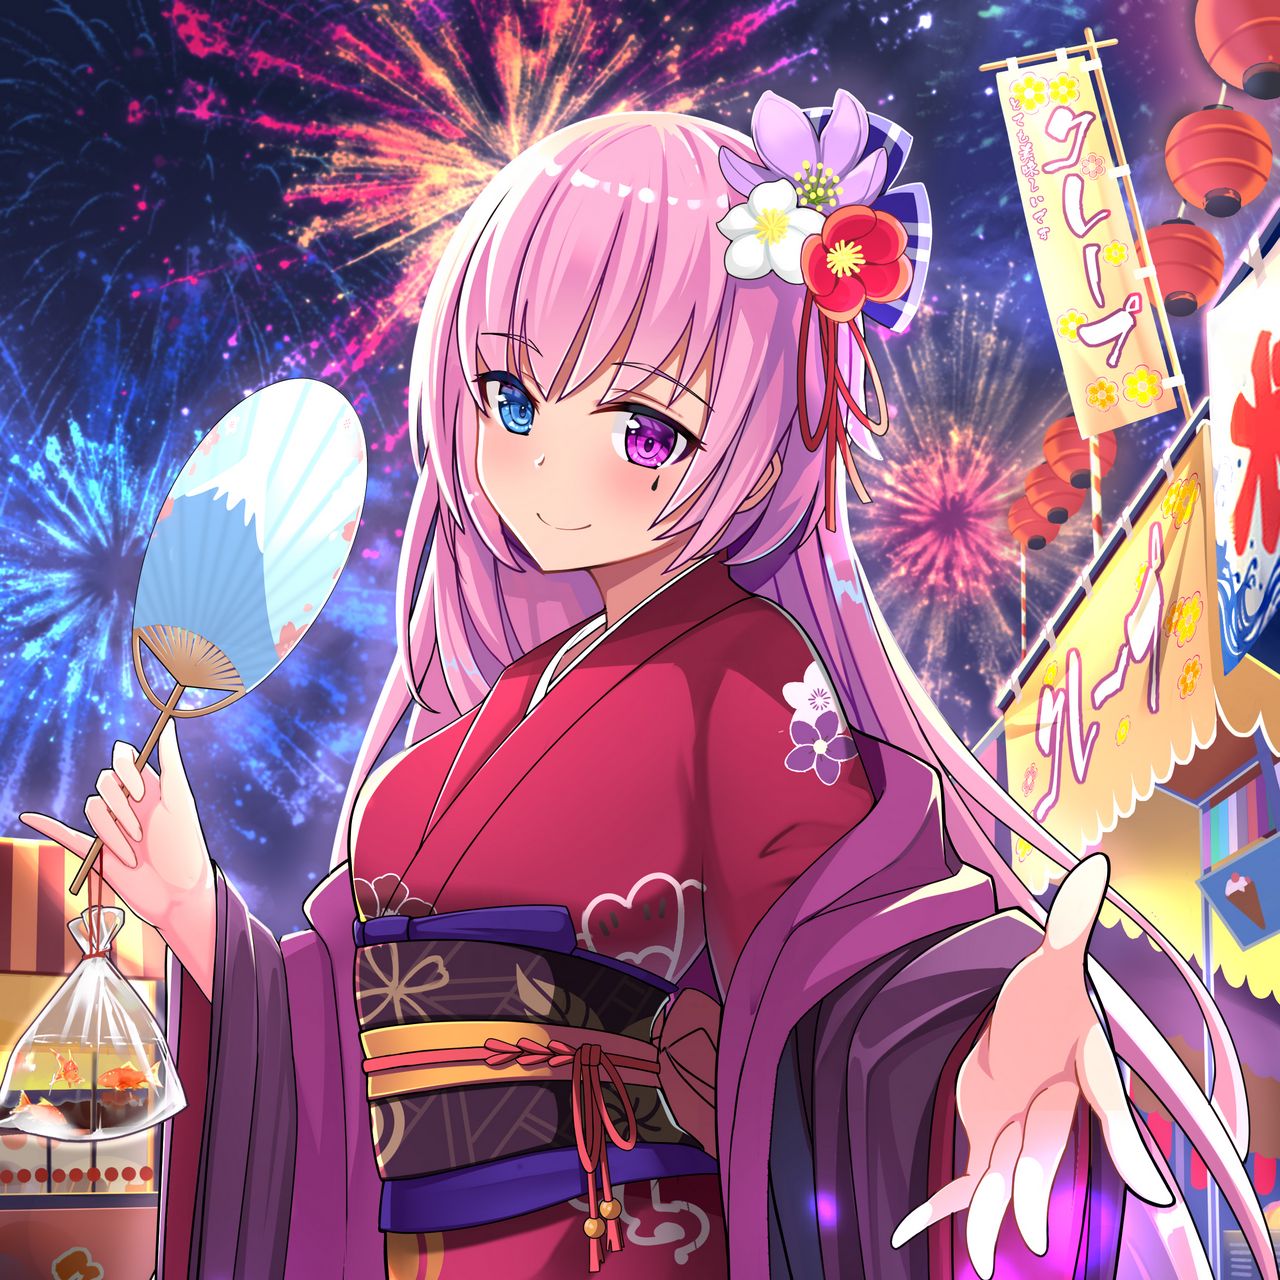 Download wallpaper 1280x1280 girl, kimono, fan, fireworks, holiday, anime ipad, ipad ipad mini for parallax HD background